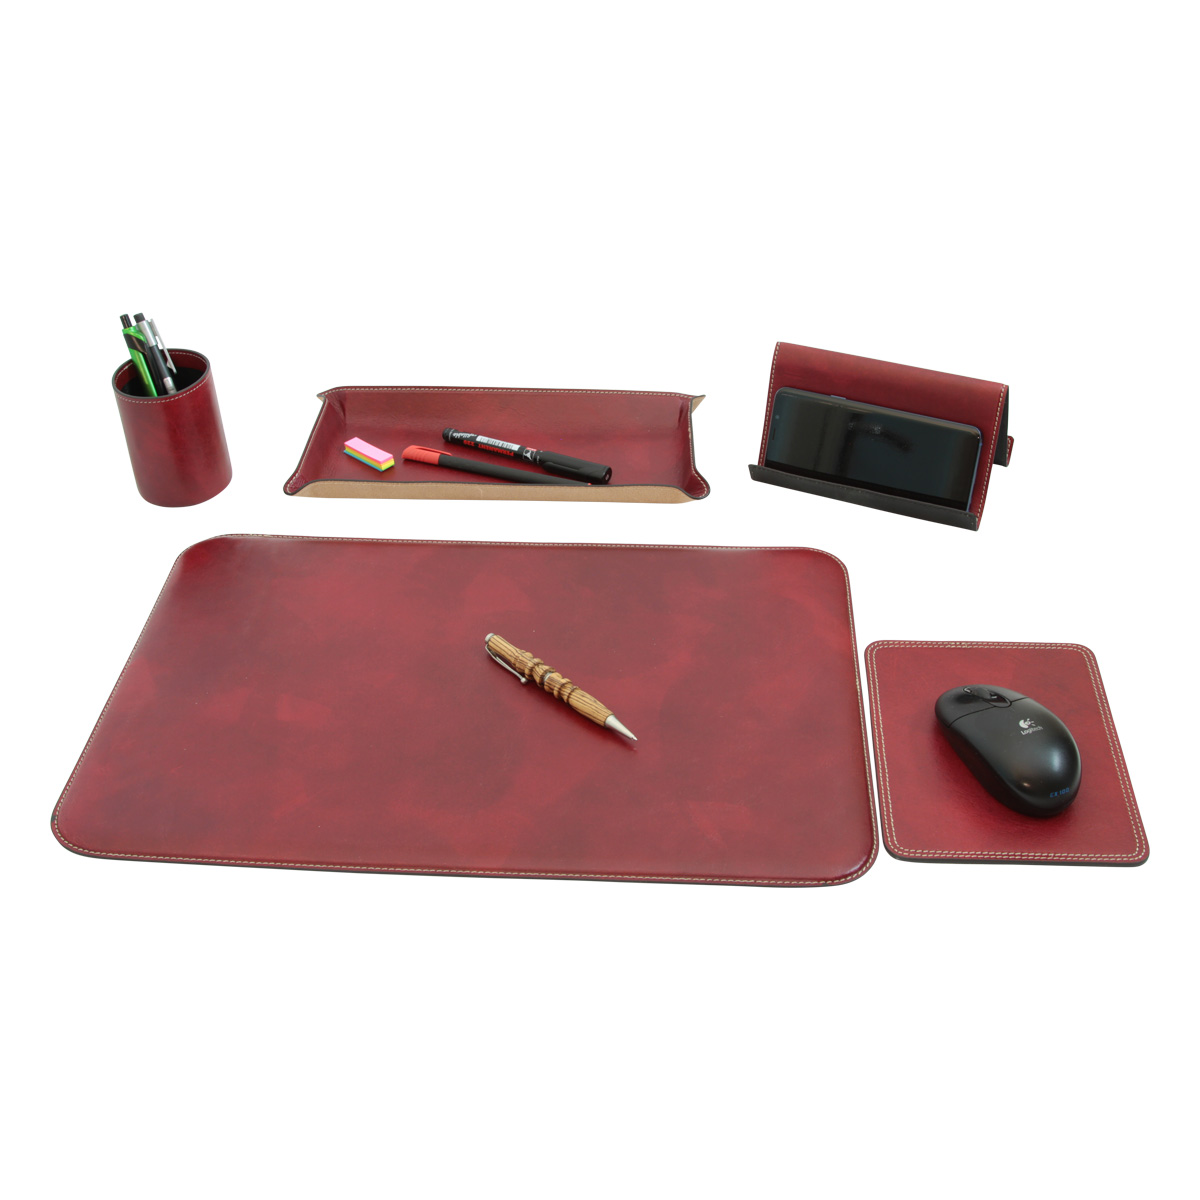 Leather desk kit - 5 pcs  red | 769089RO US | Old Angler Firenze